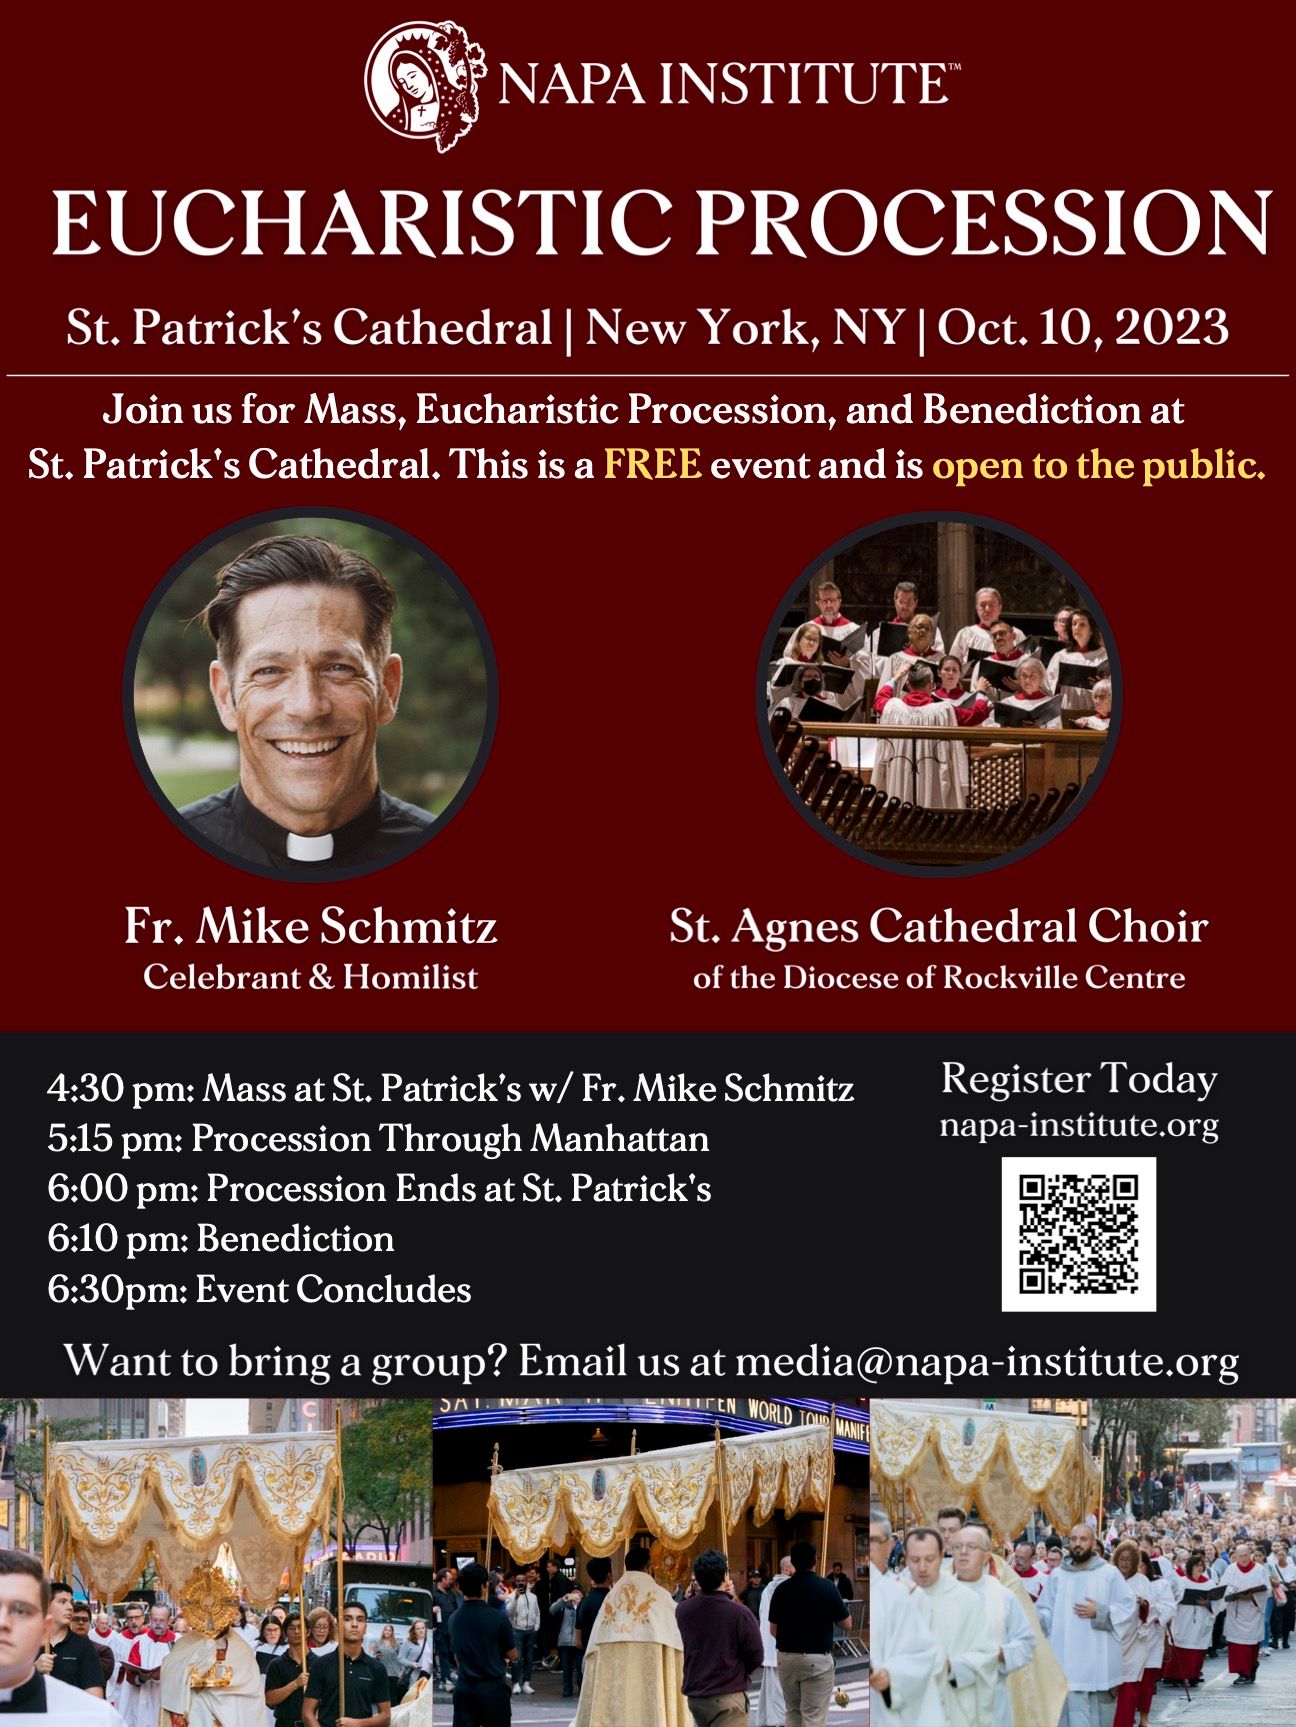 father mike schmitz, new york city, napa institute, eucharistic procession nyc